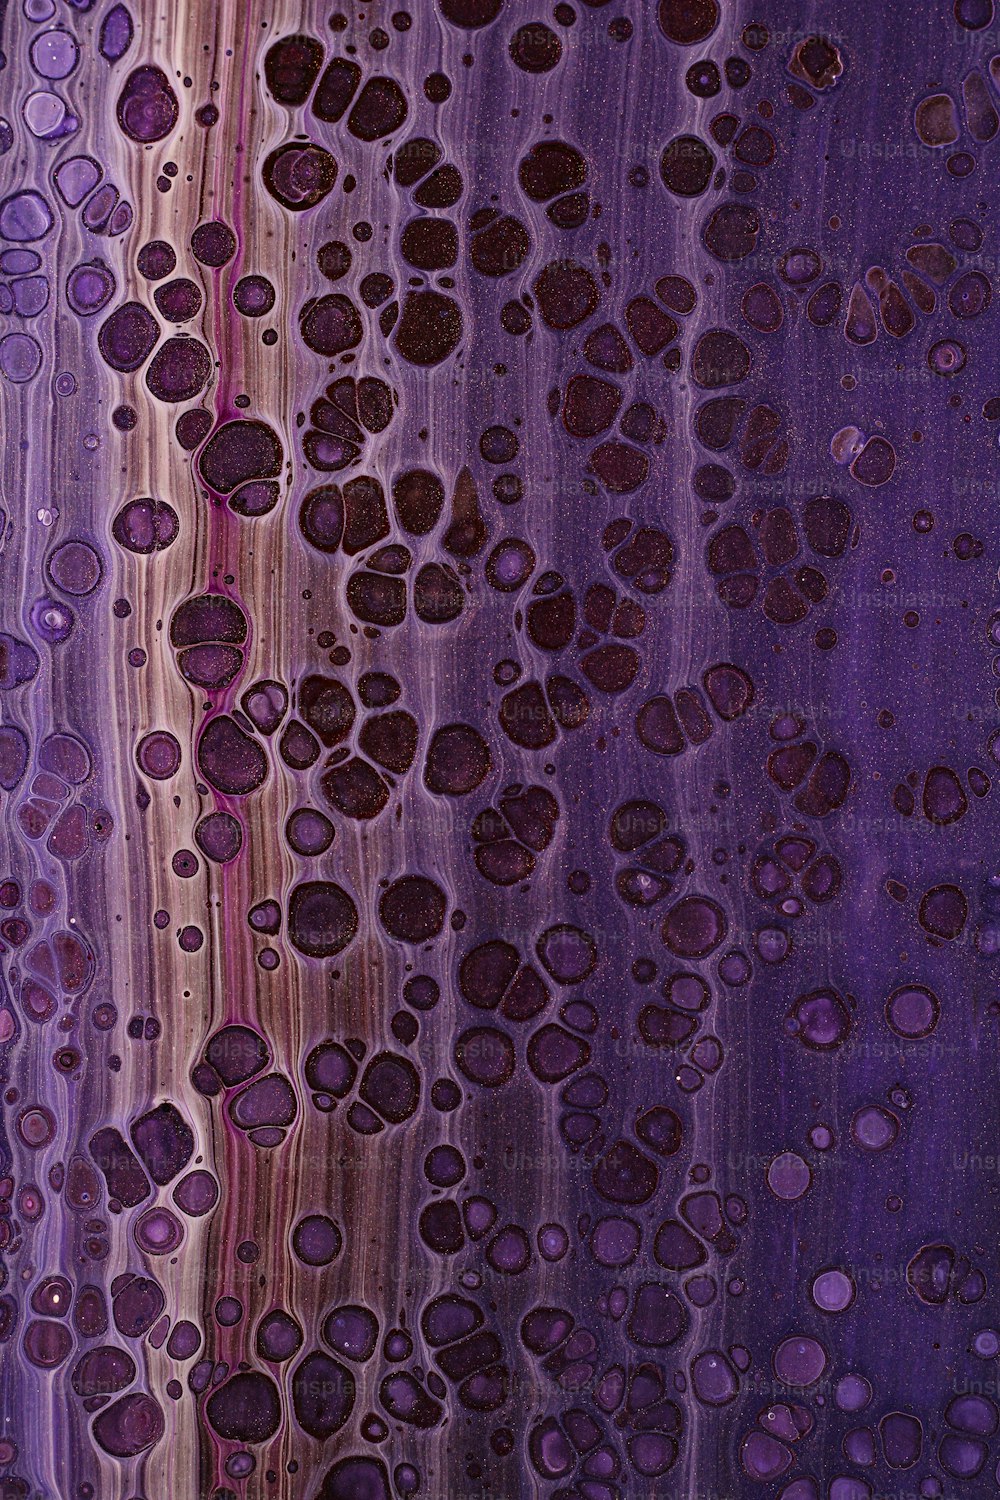 Un primer plano de gotas de agua sobre una superficie púrpura